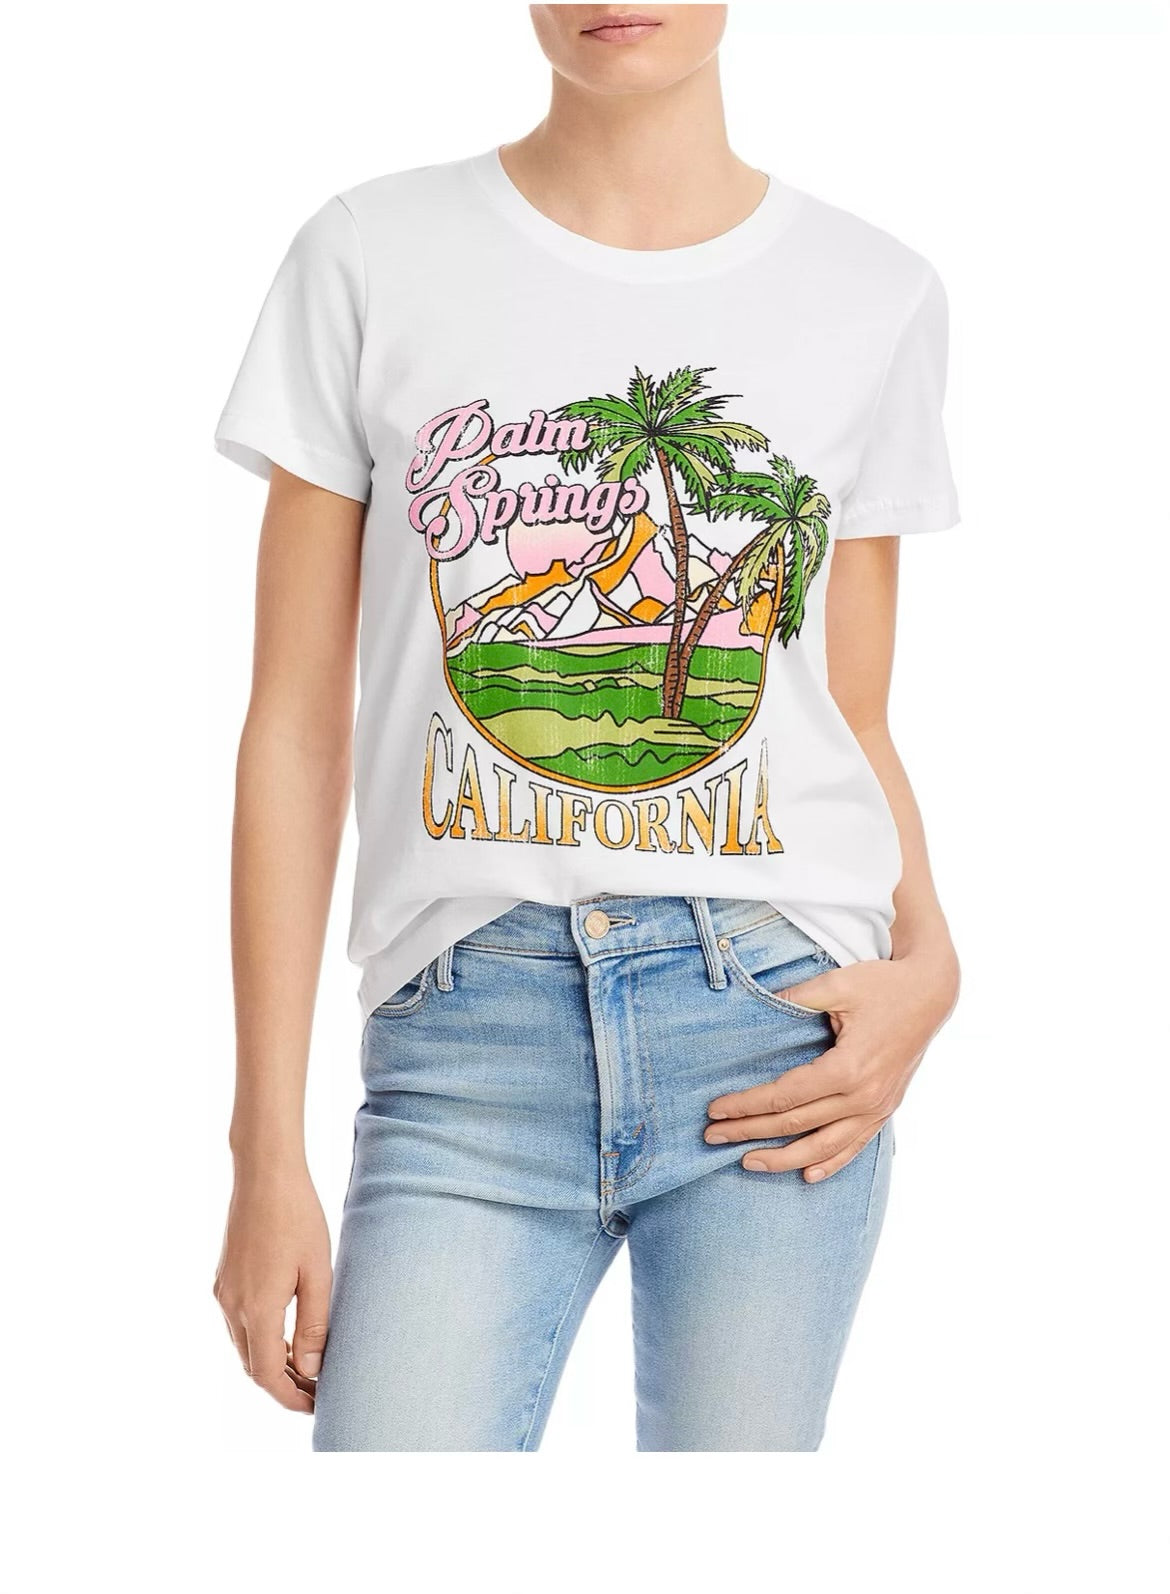 Palm Springs California Adult Crew T-Shirt